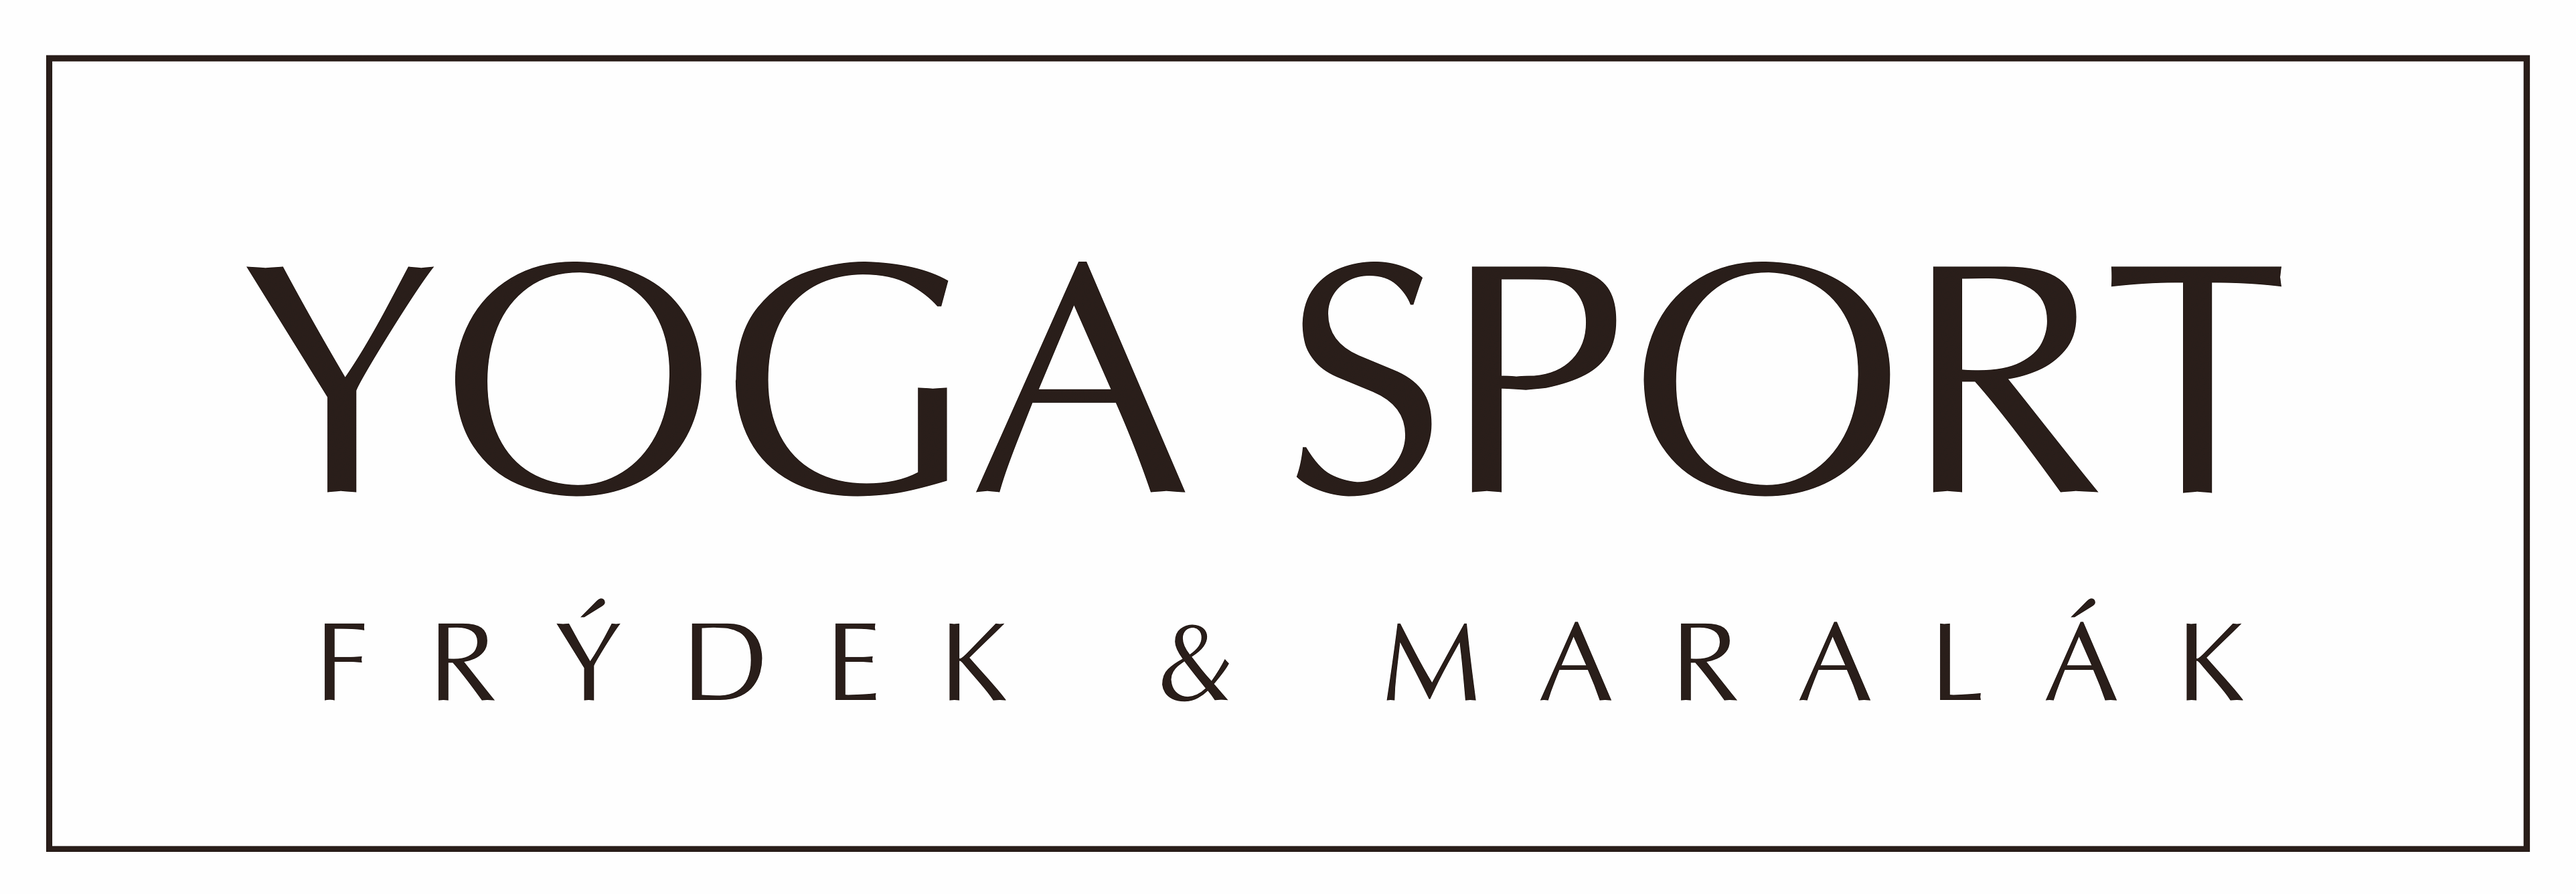 Yogasport Shop